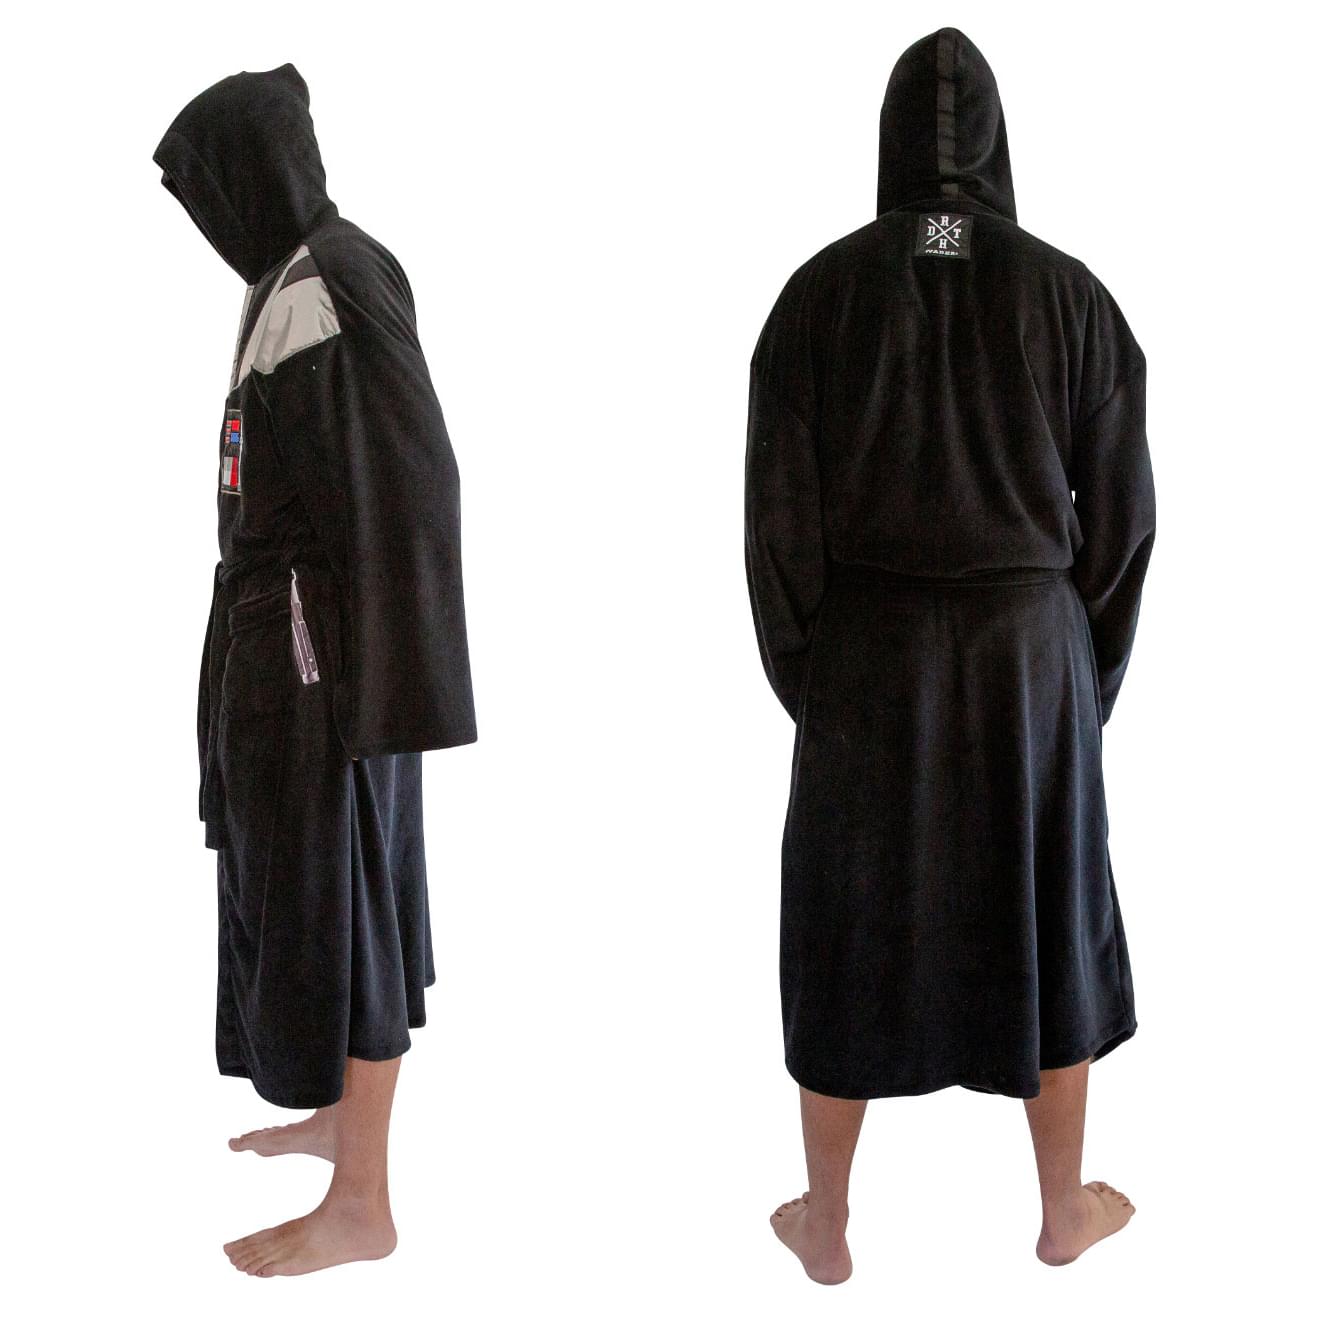 Star Wars Darth Vader Uniform Hooded Bathrobe For Adults | Big And Tall XXL